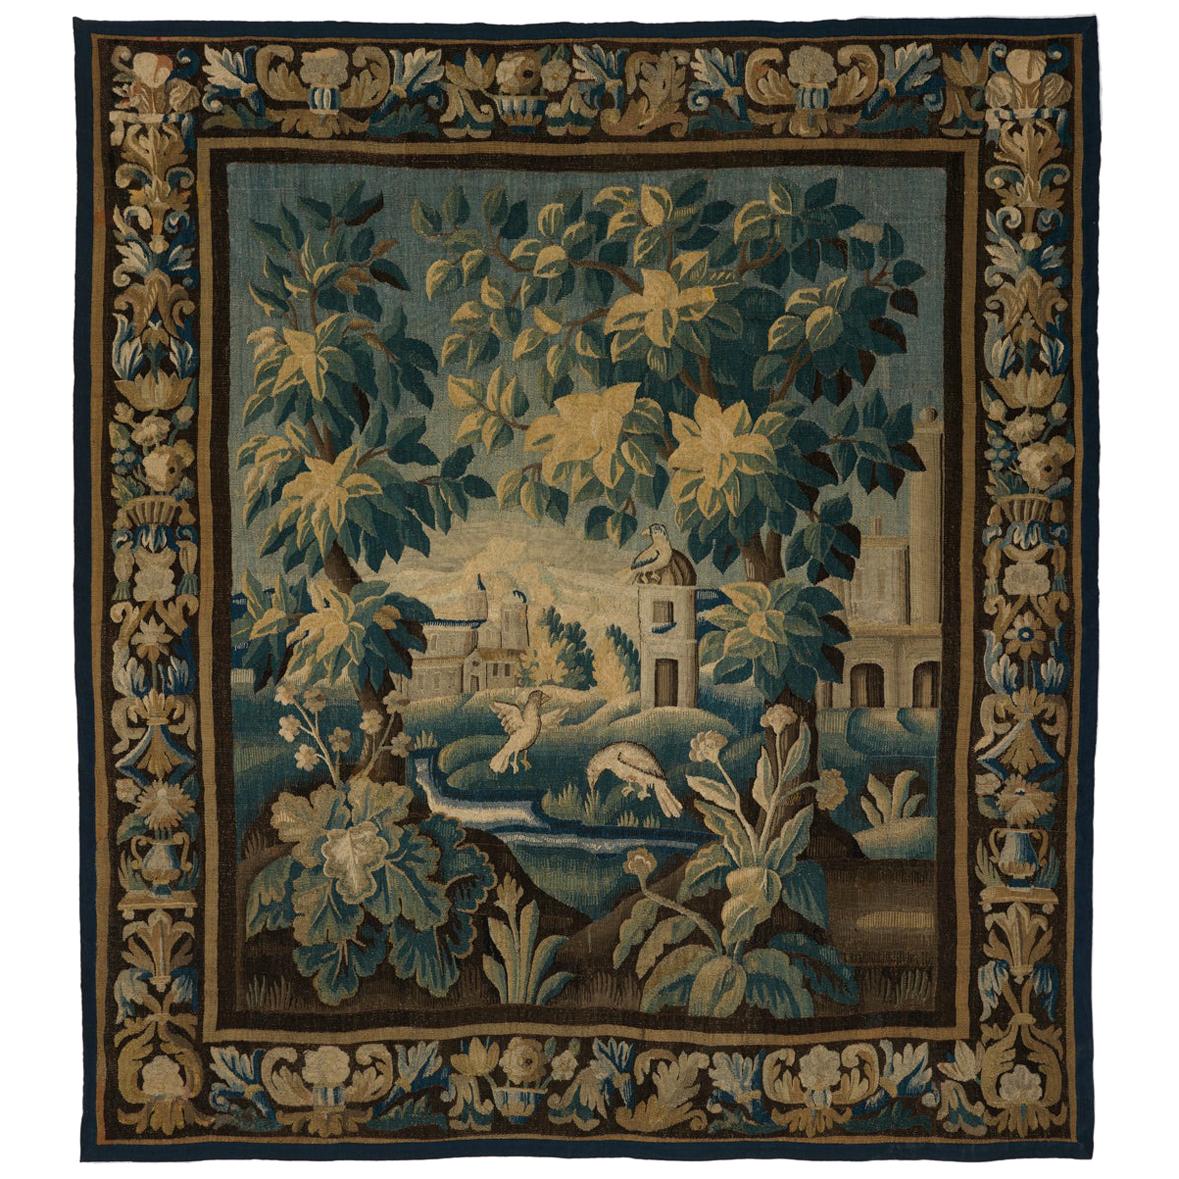 Antique Verdure Aubusson Tapestry with Birds